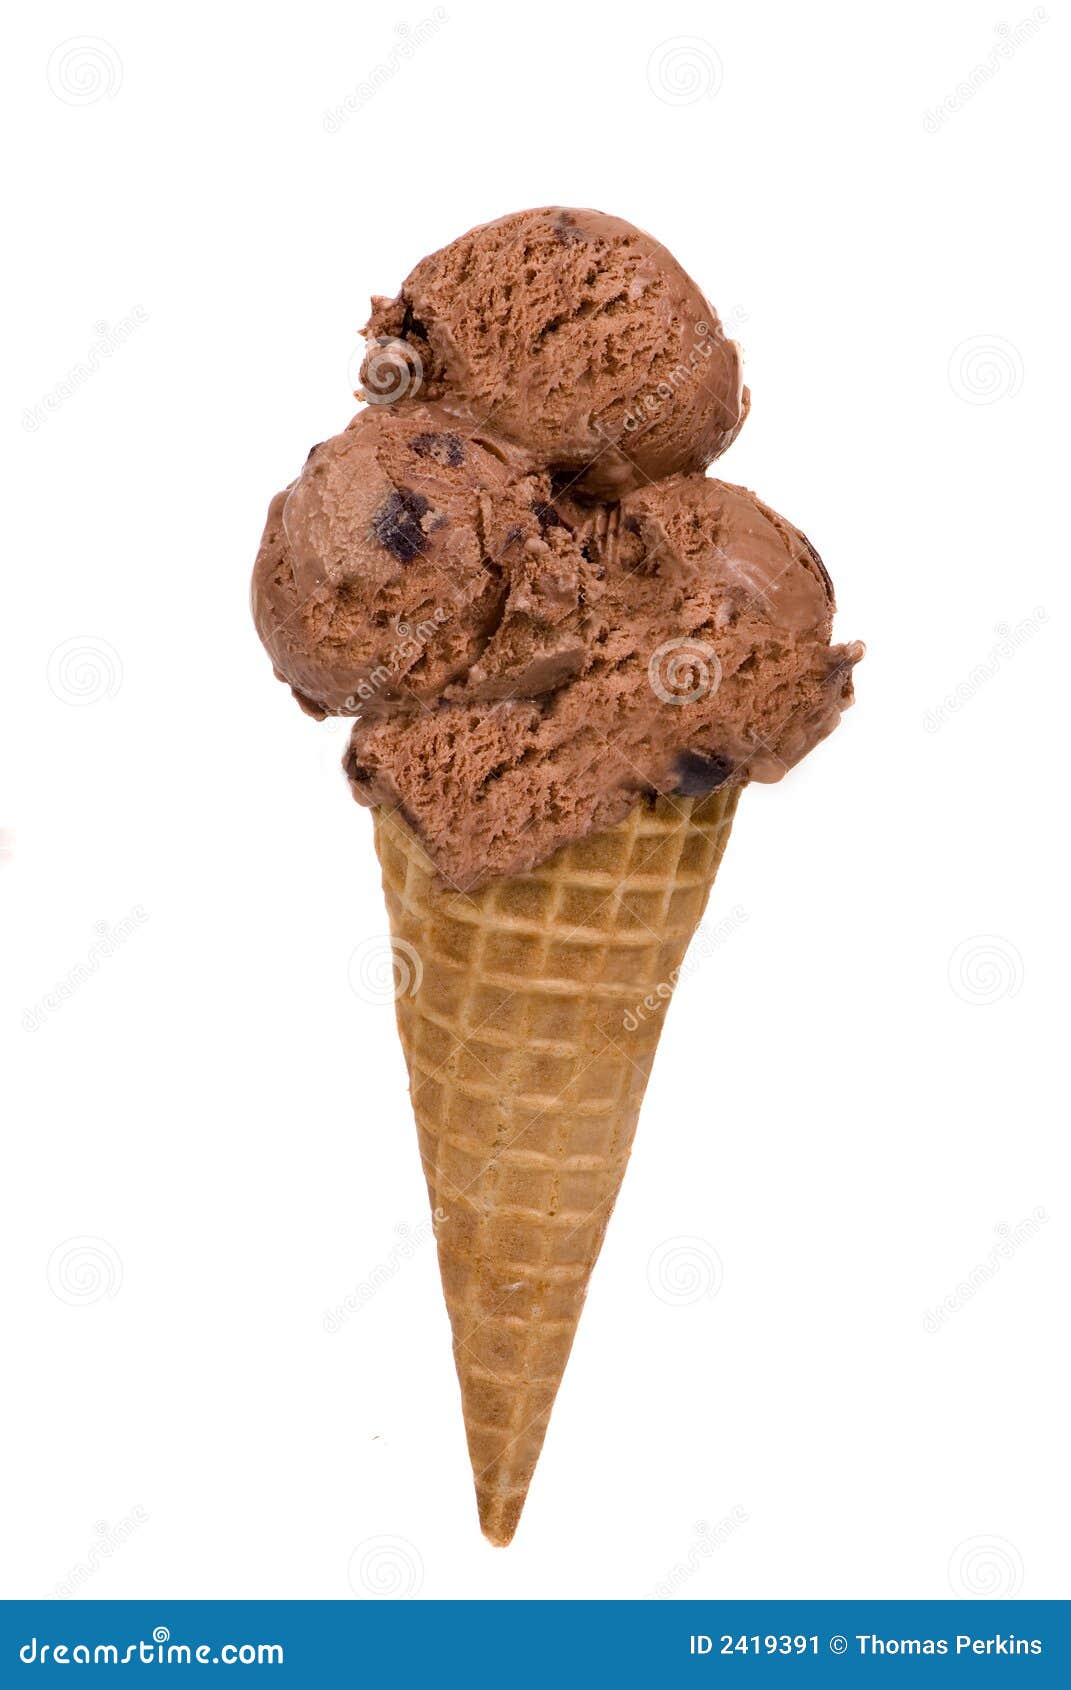 chocolate-ice-cream-cone-stock-image-image-2419391